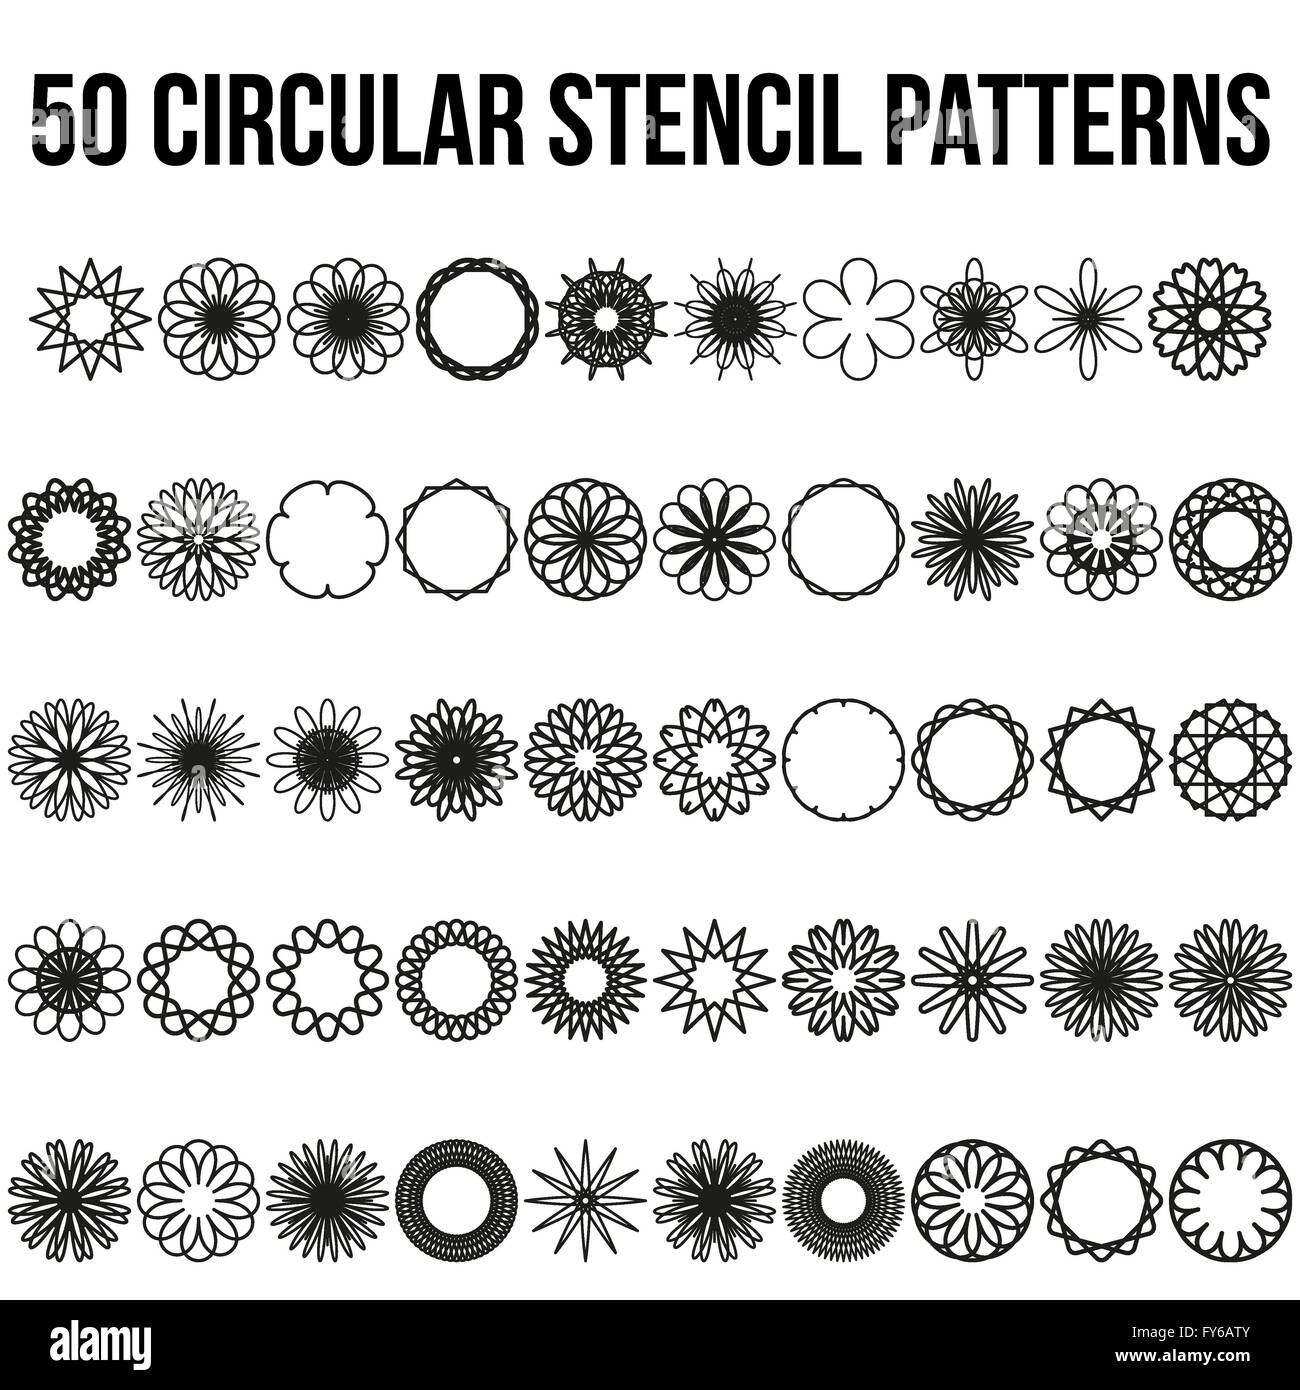 Geometric circular ornament set. Stock Photo